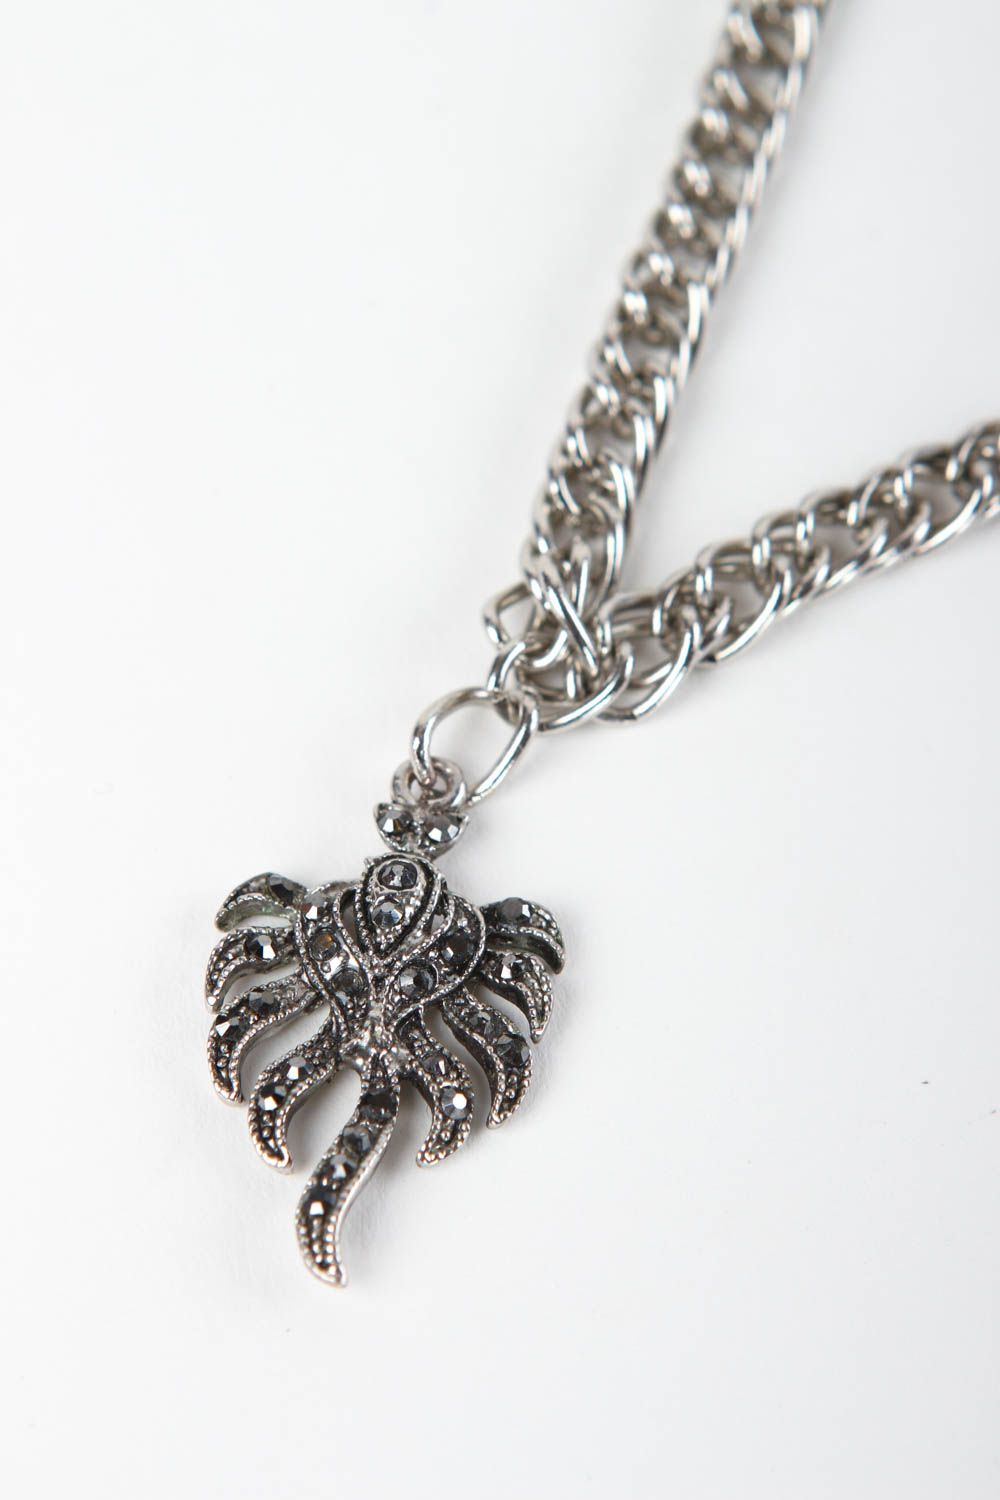 Unusual handmade metal pendant metal necklace designs accessories for girls photo 3